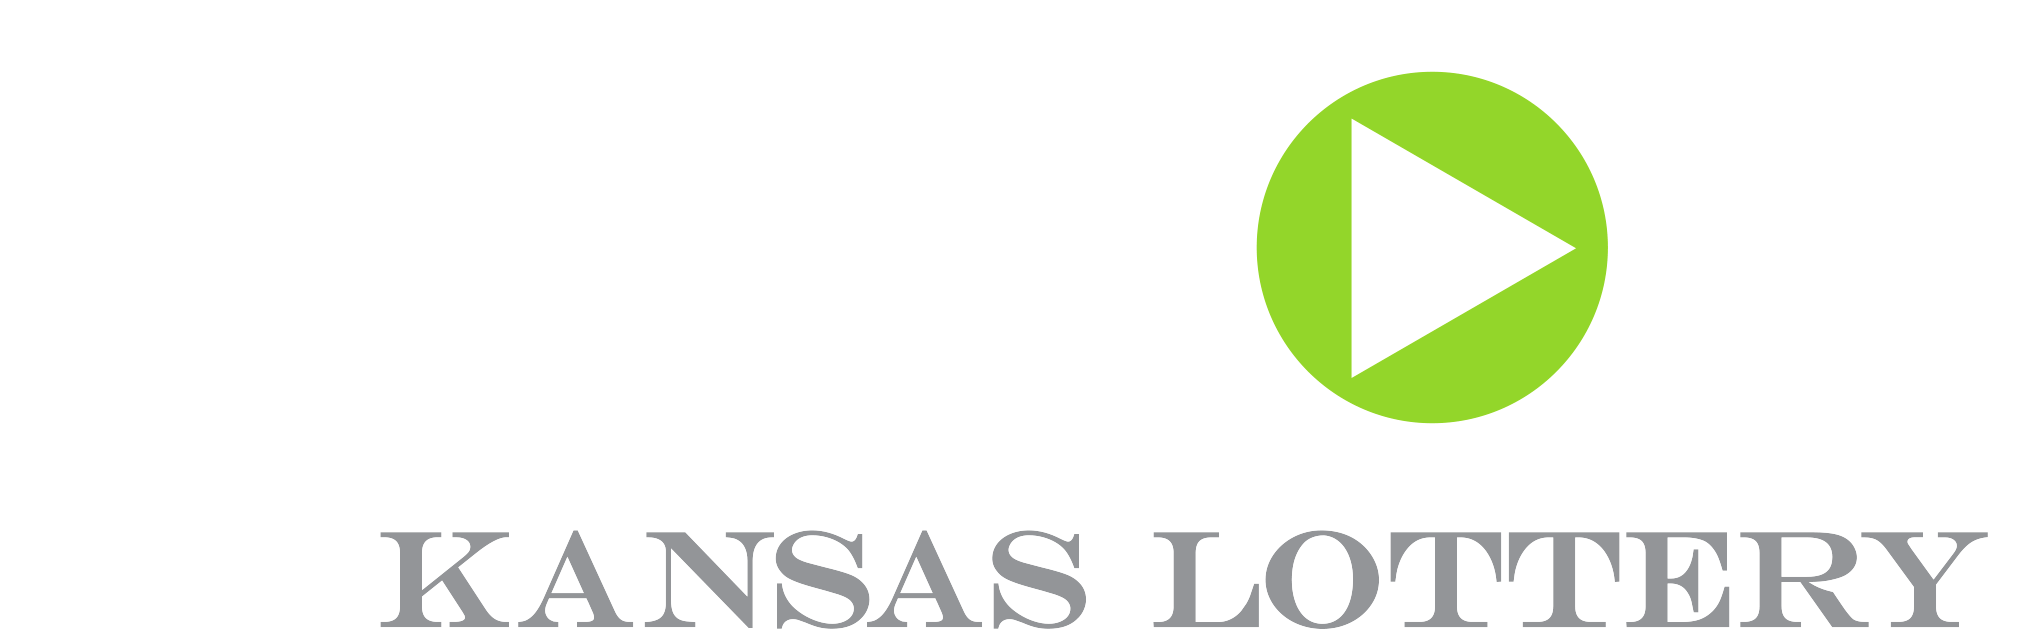 Kansas Lottery Play On Logo PNG image